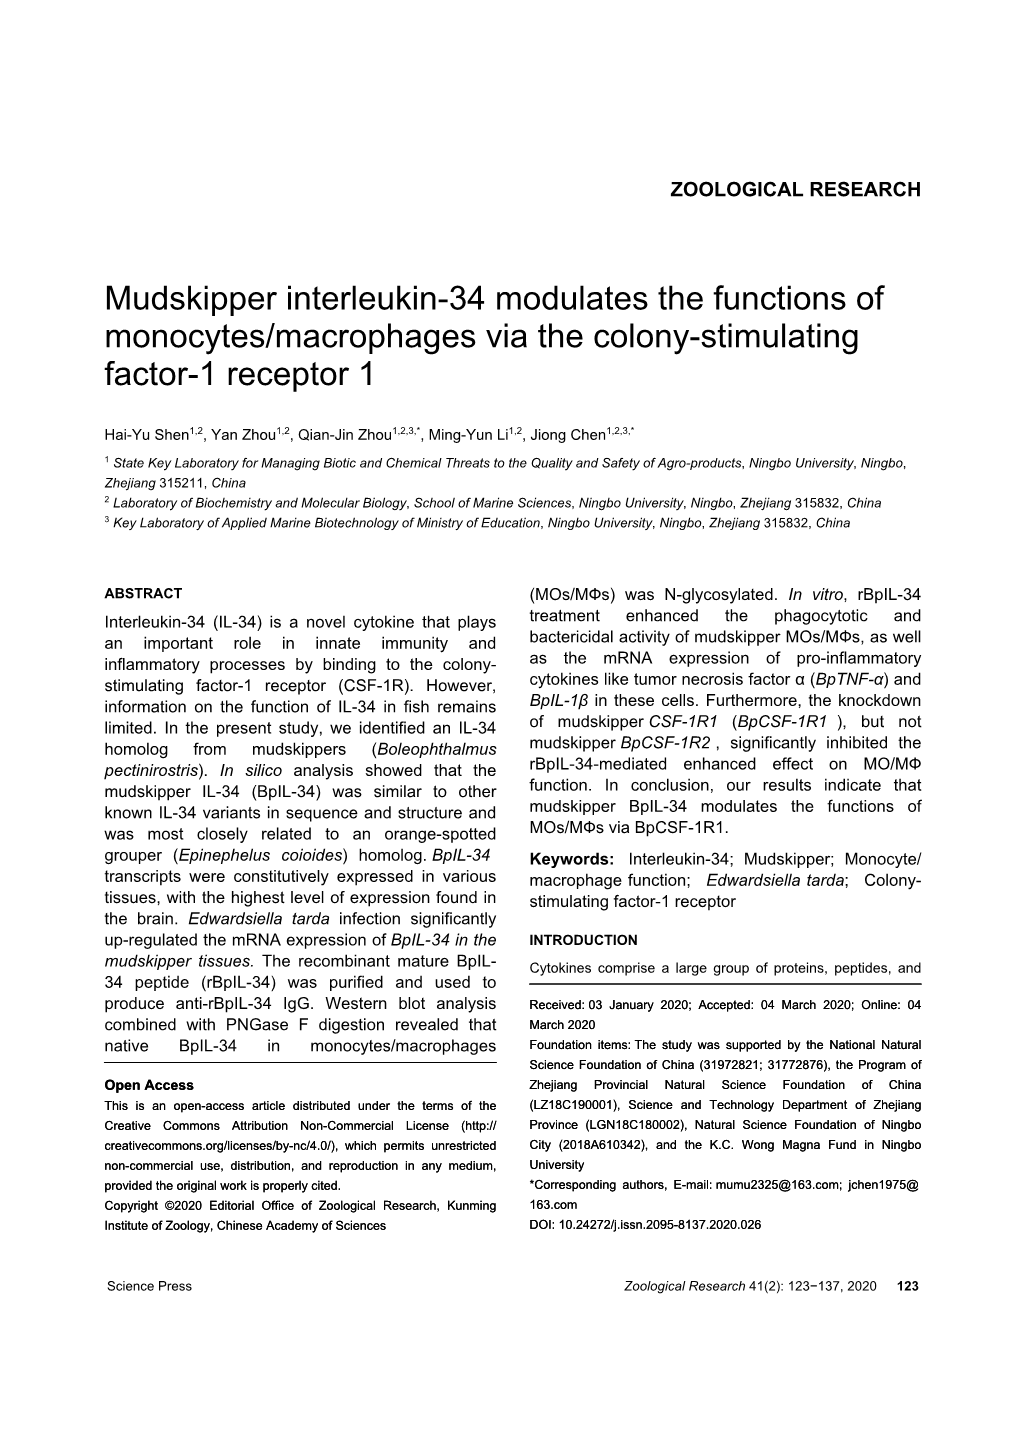 Mudskipper Interleukin-34 Modulates the Functions of Monocytes/Macrophages Via the Colony-Stimulating Factor-1 Receptor 1